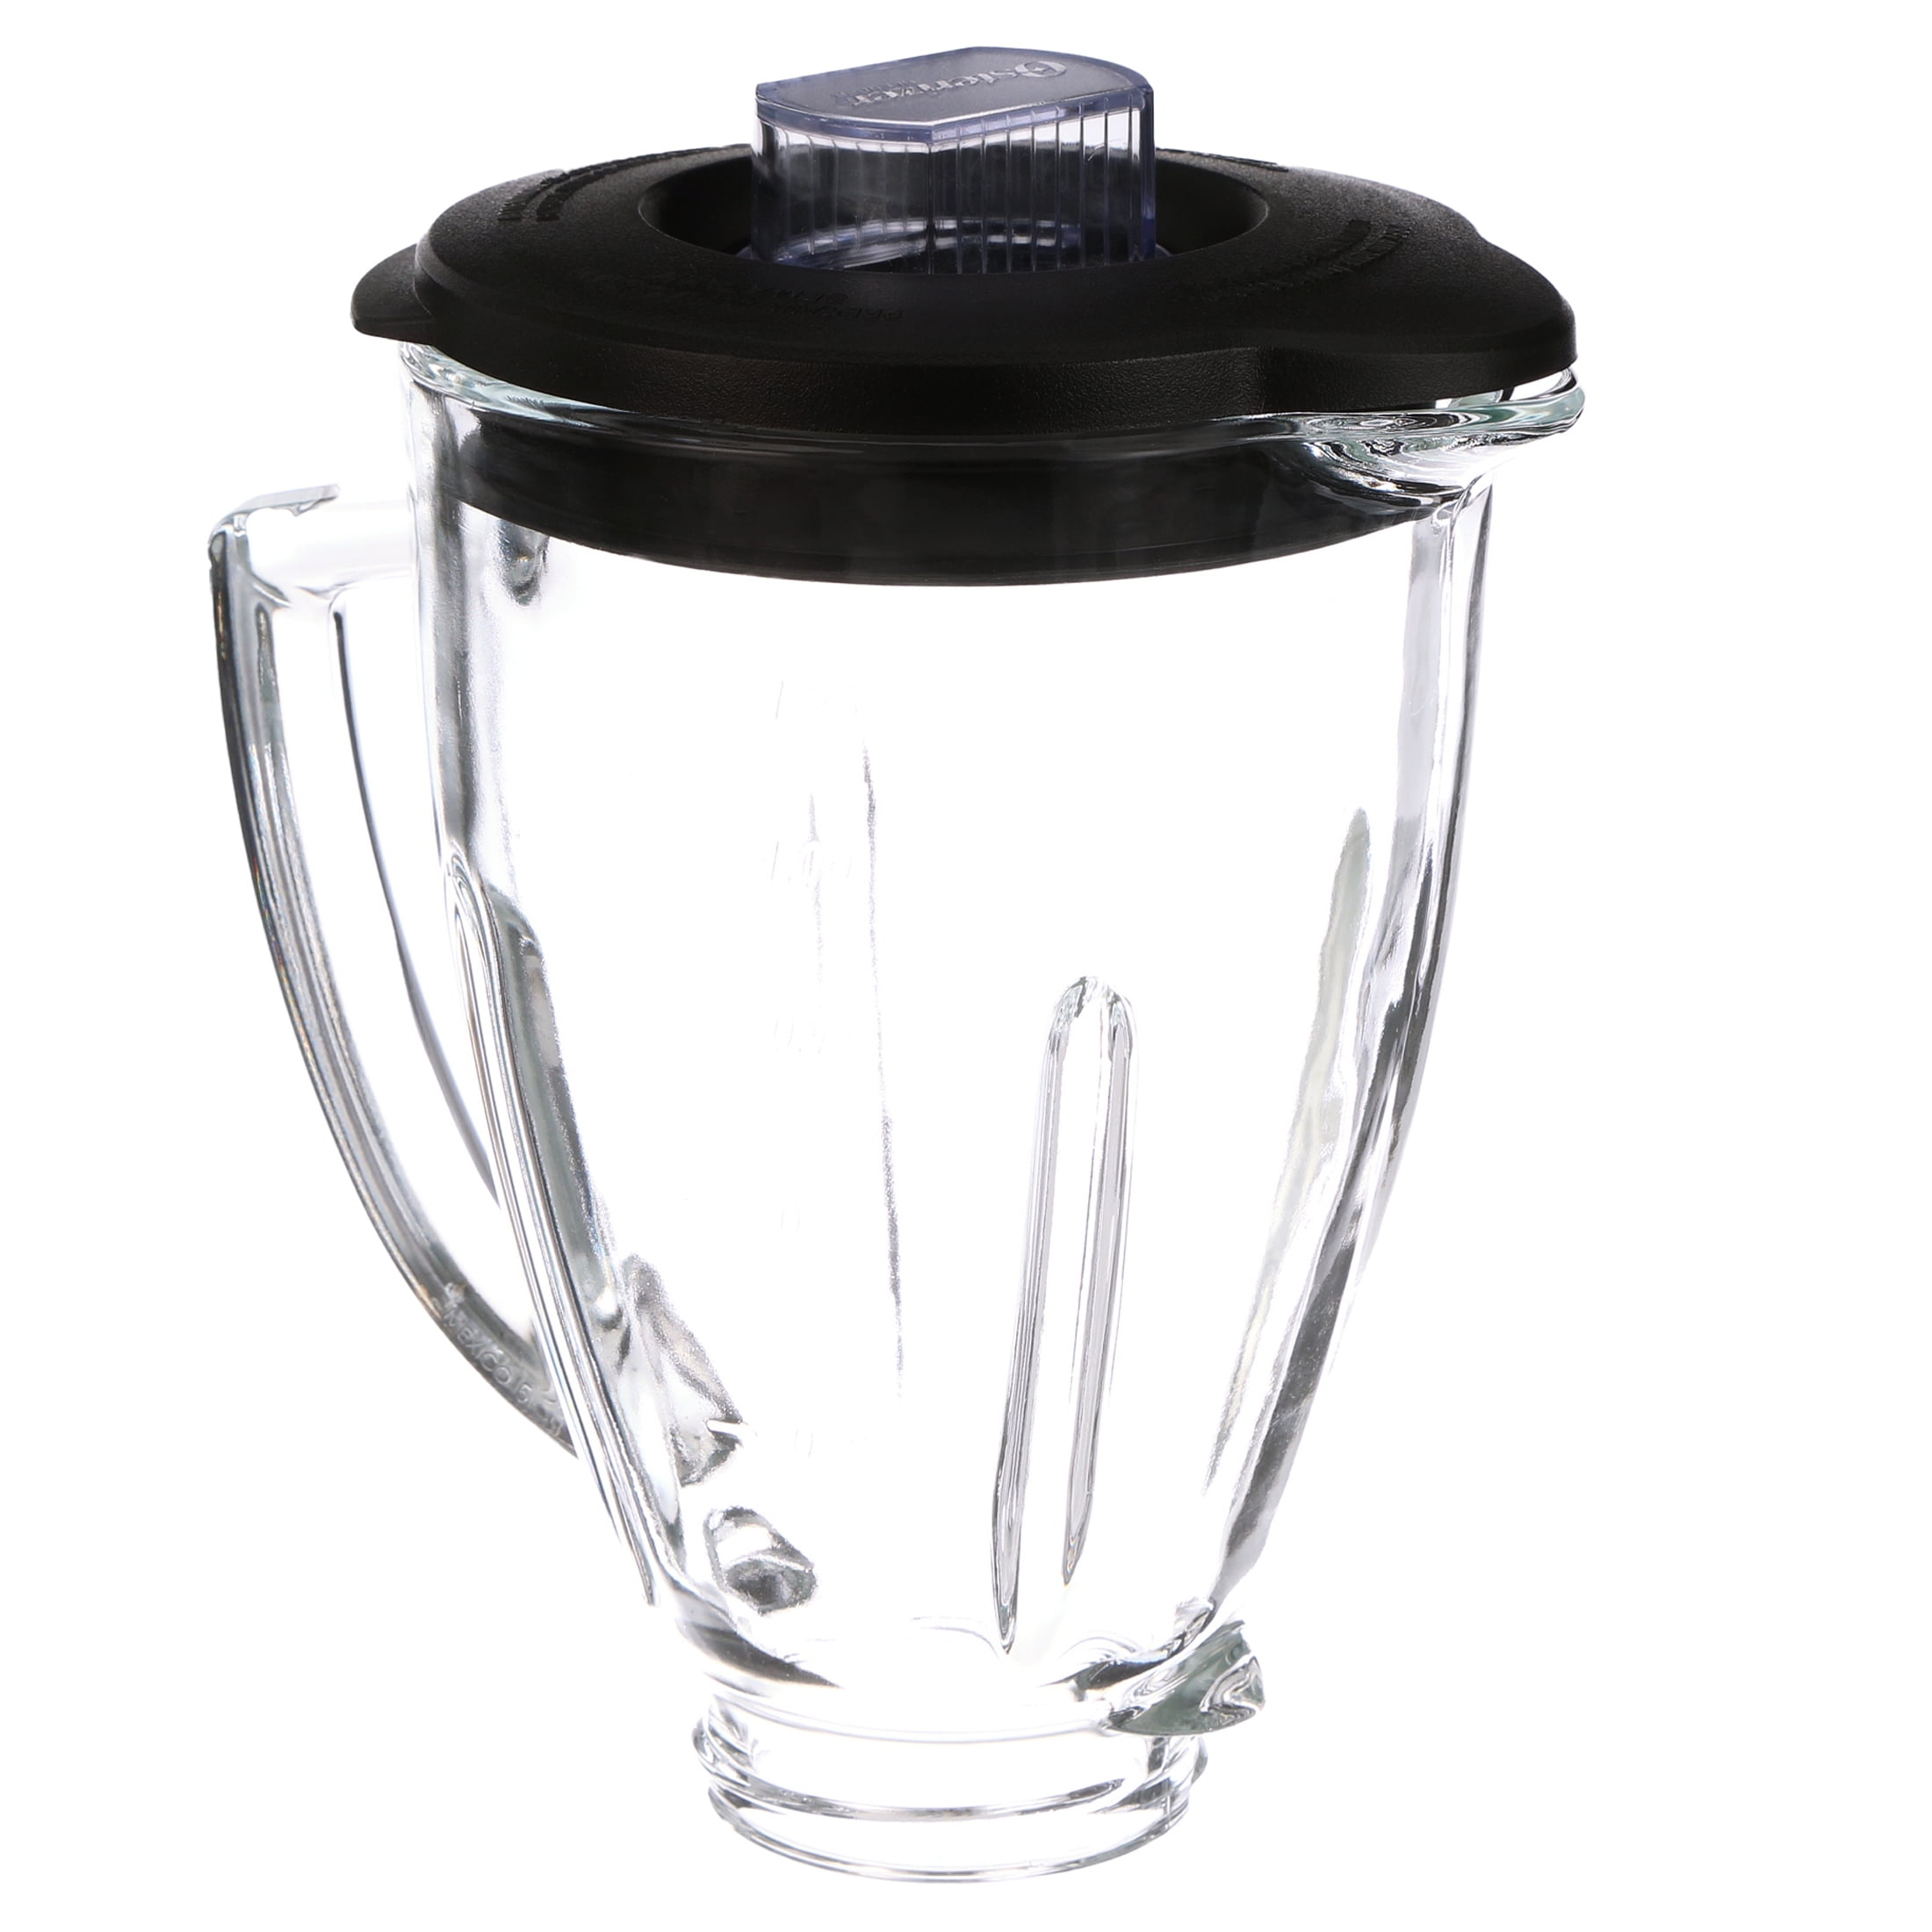  Oster BLSTAJ-CB licuadora con jarra de vidrio, 6 tazas